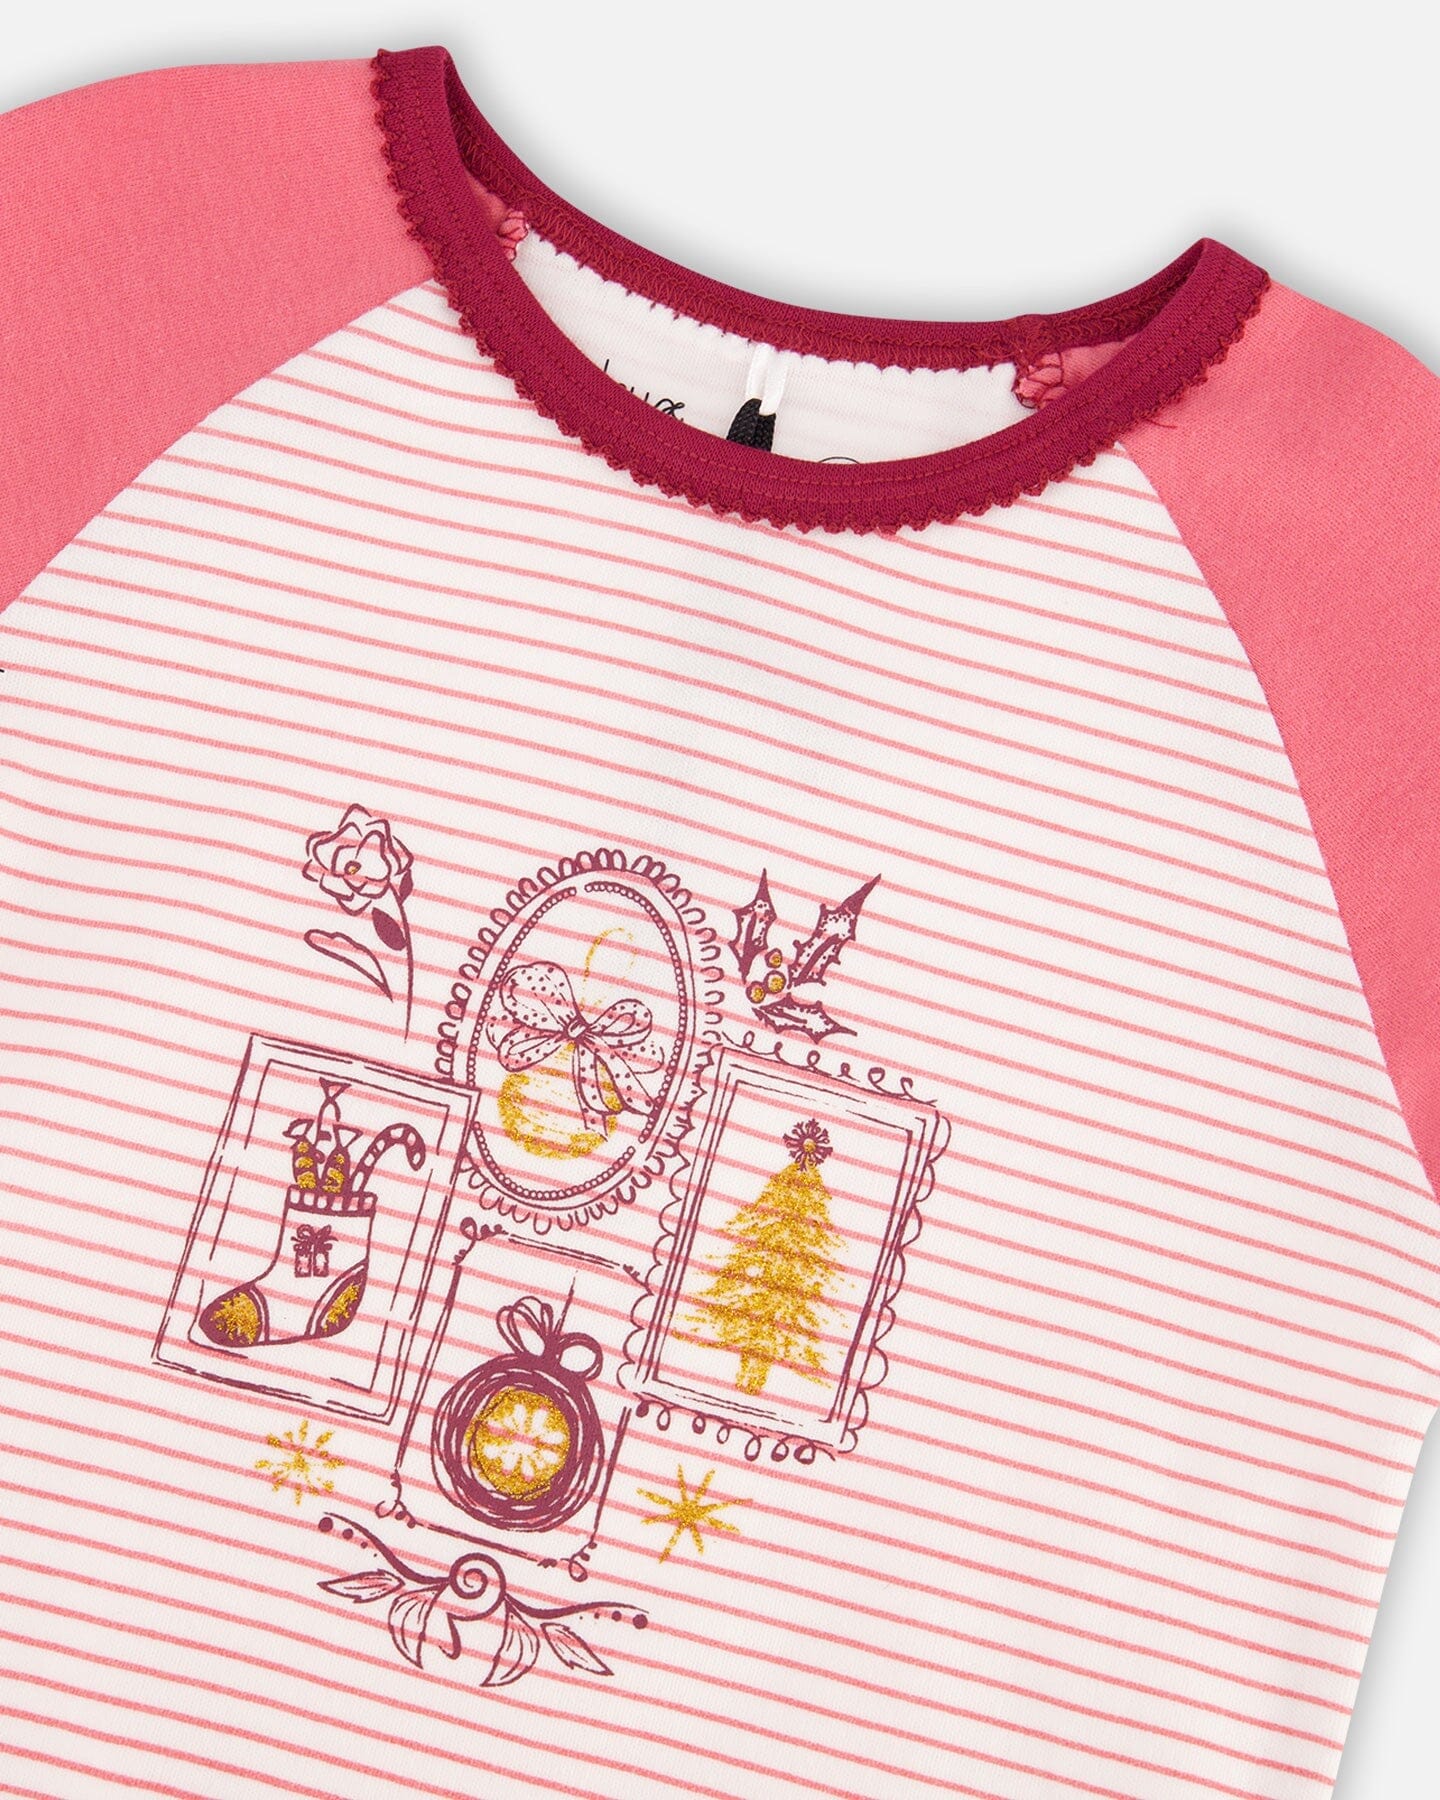 Organic Cotton Long Sleeve Two Piece Pajama Set Pink Christmas Stocking Print - F20PG16_059